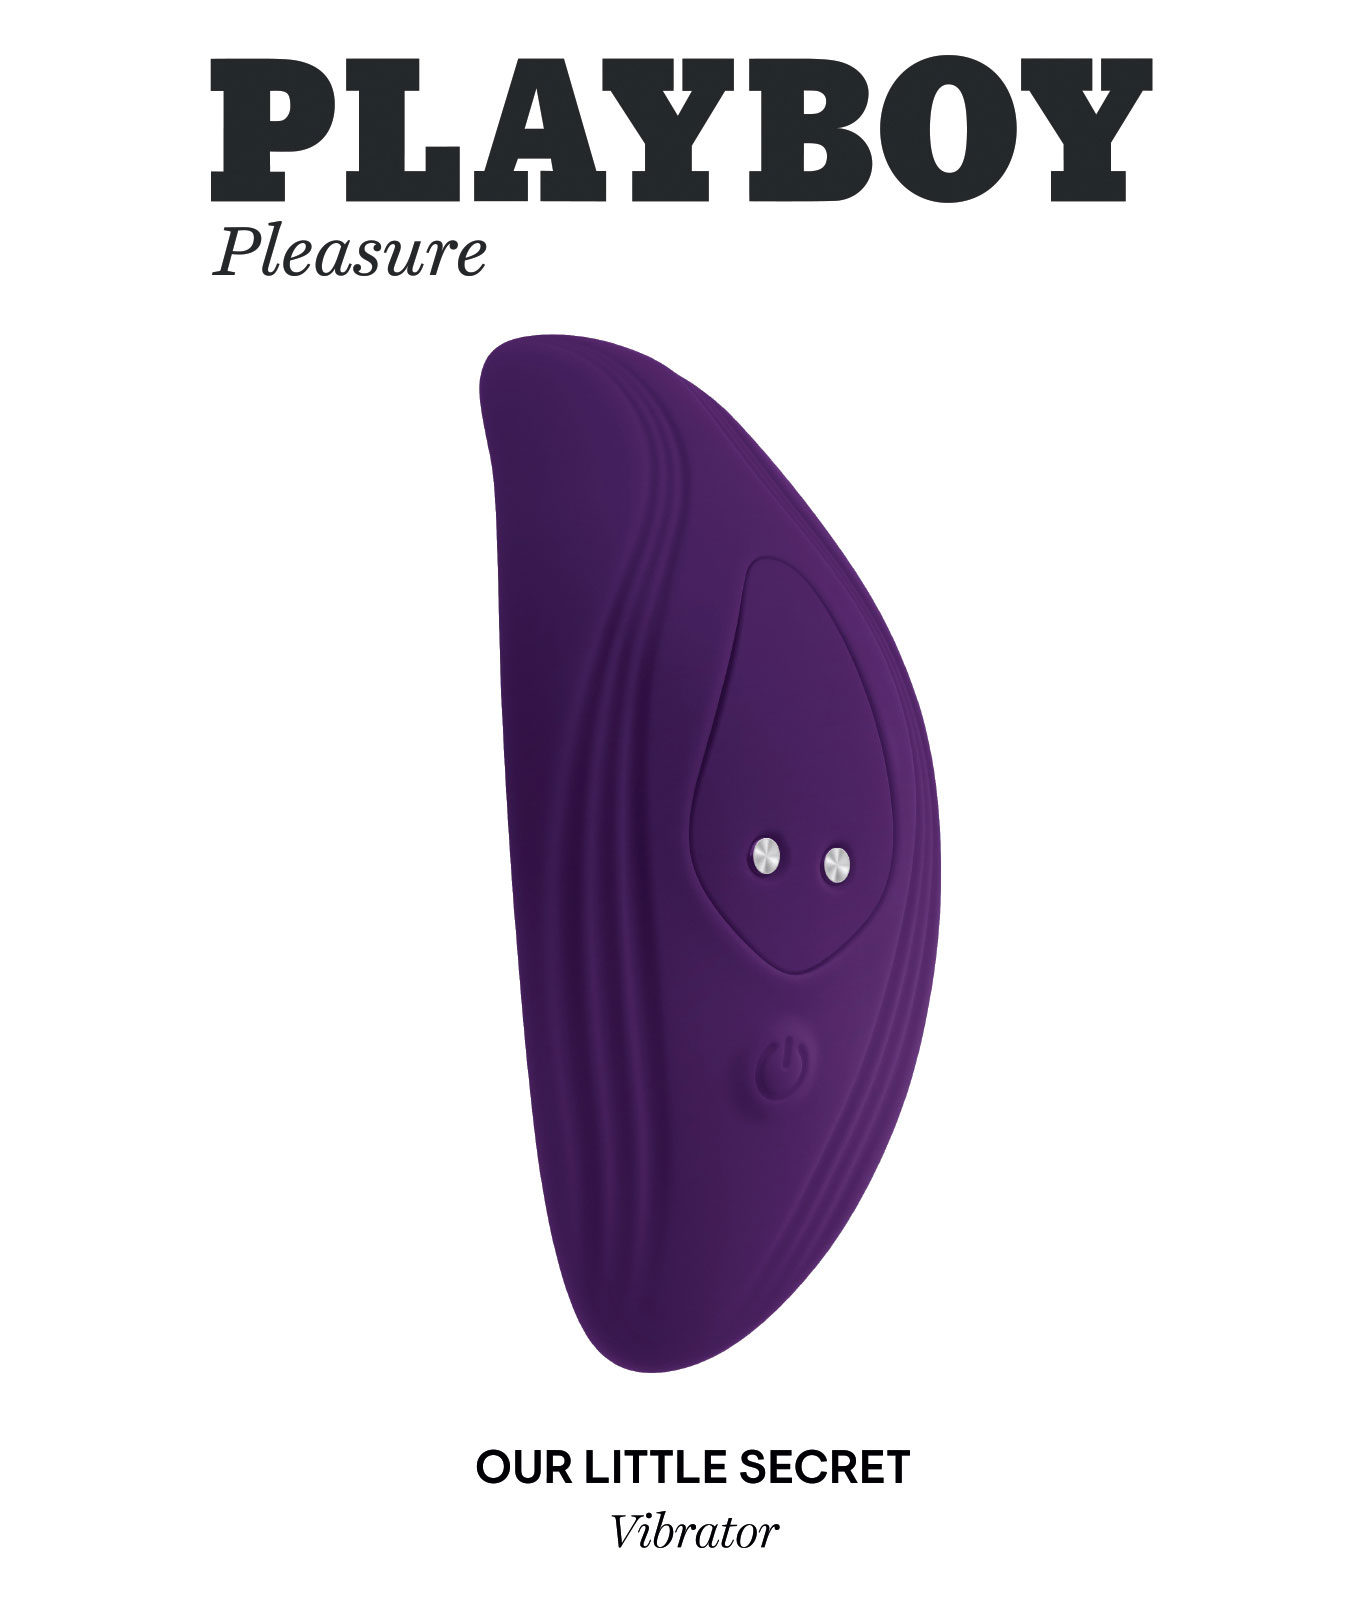 playboy pleasure our little secret vibrator  dark purple 